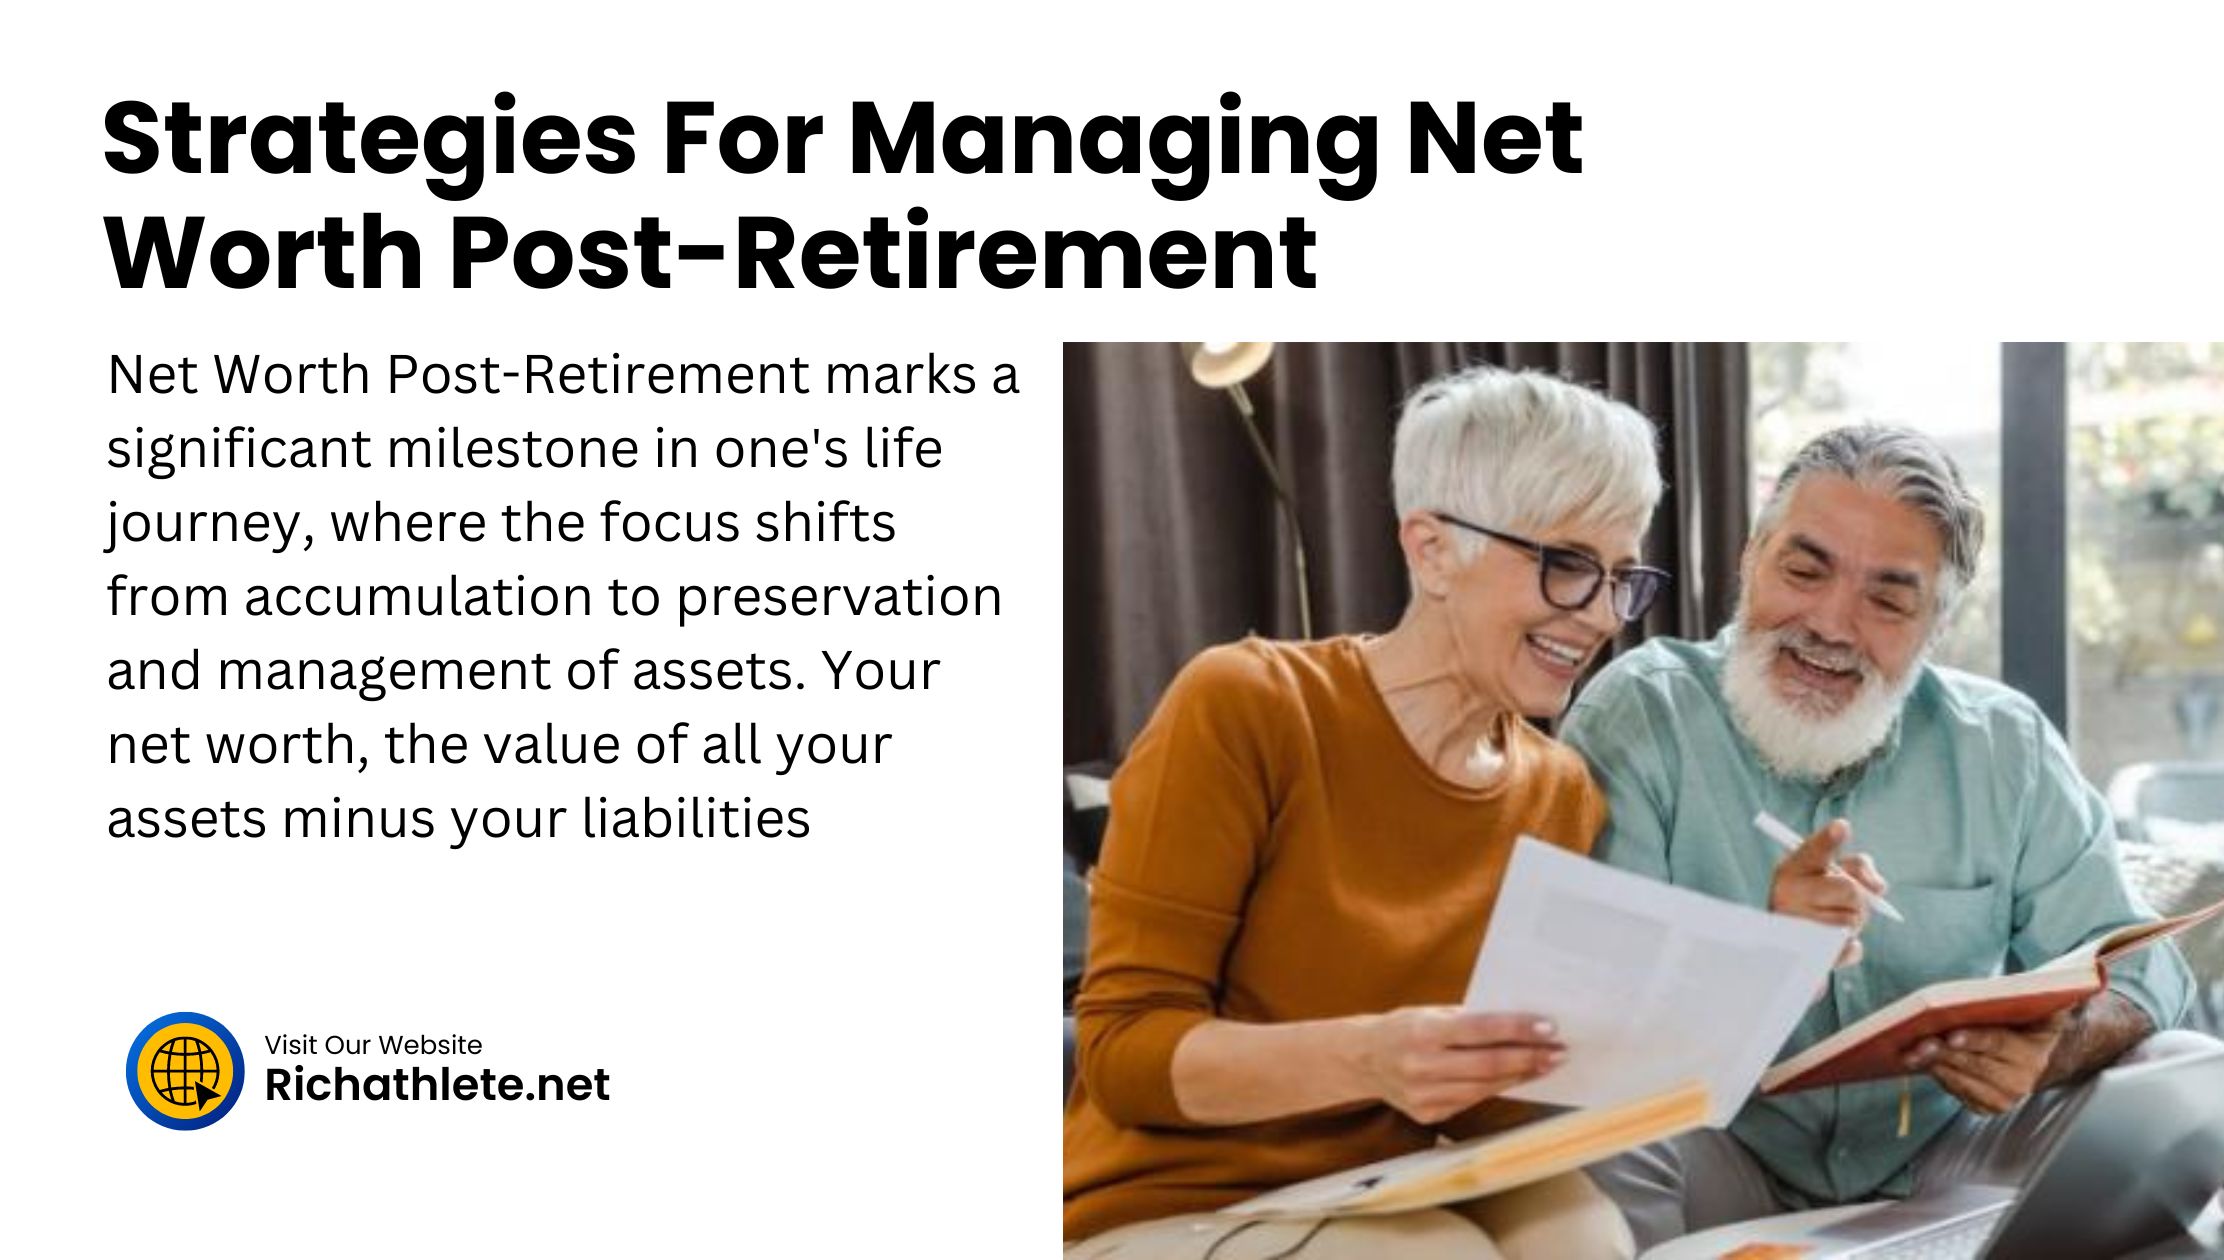 Strategies For Managing Net Worth Post-Retirement